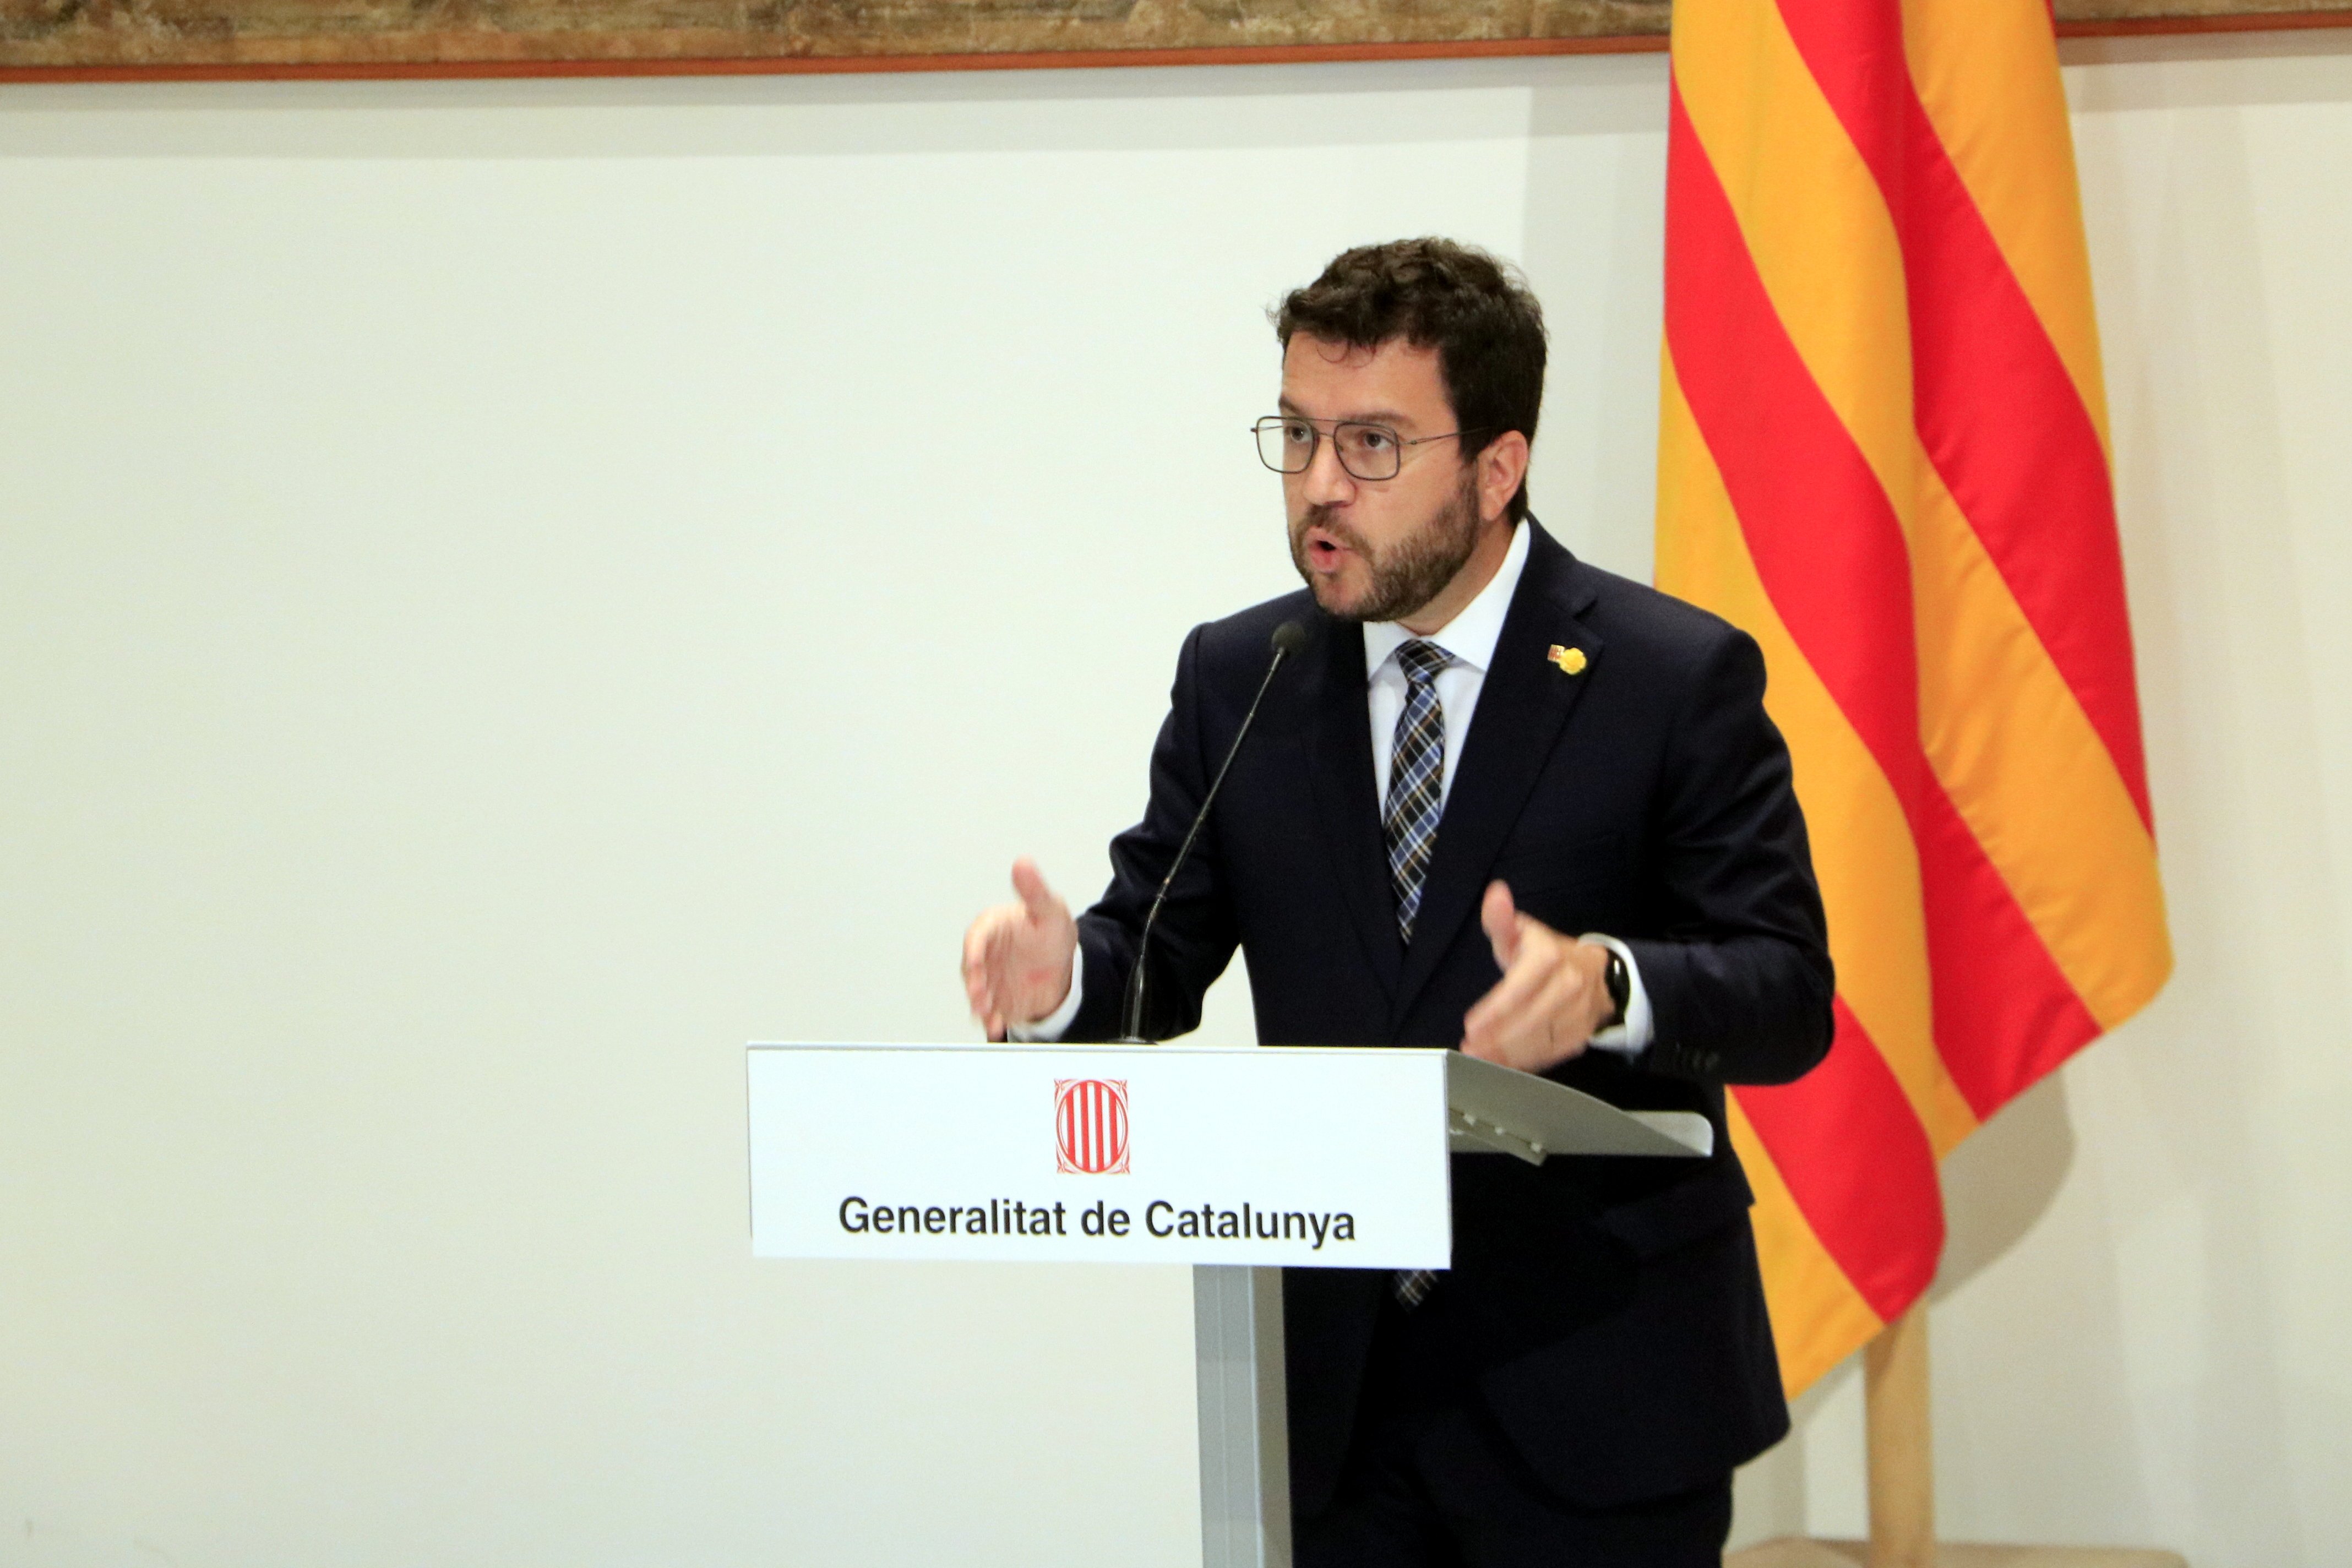 Catalan president, angry at Spain's airport U-turn but "won't abandon dialogue"